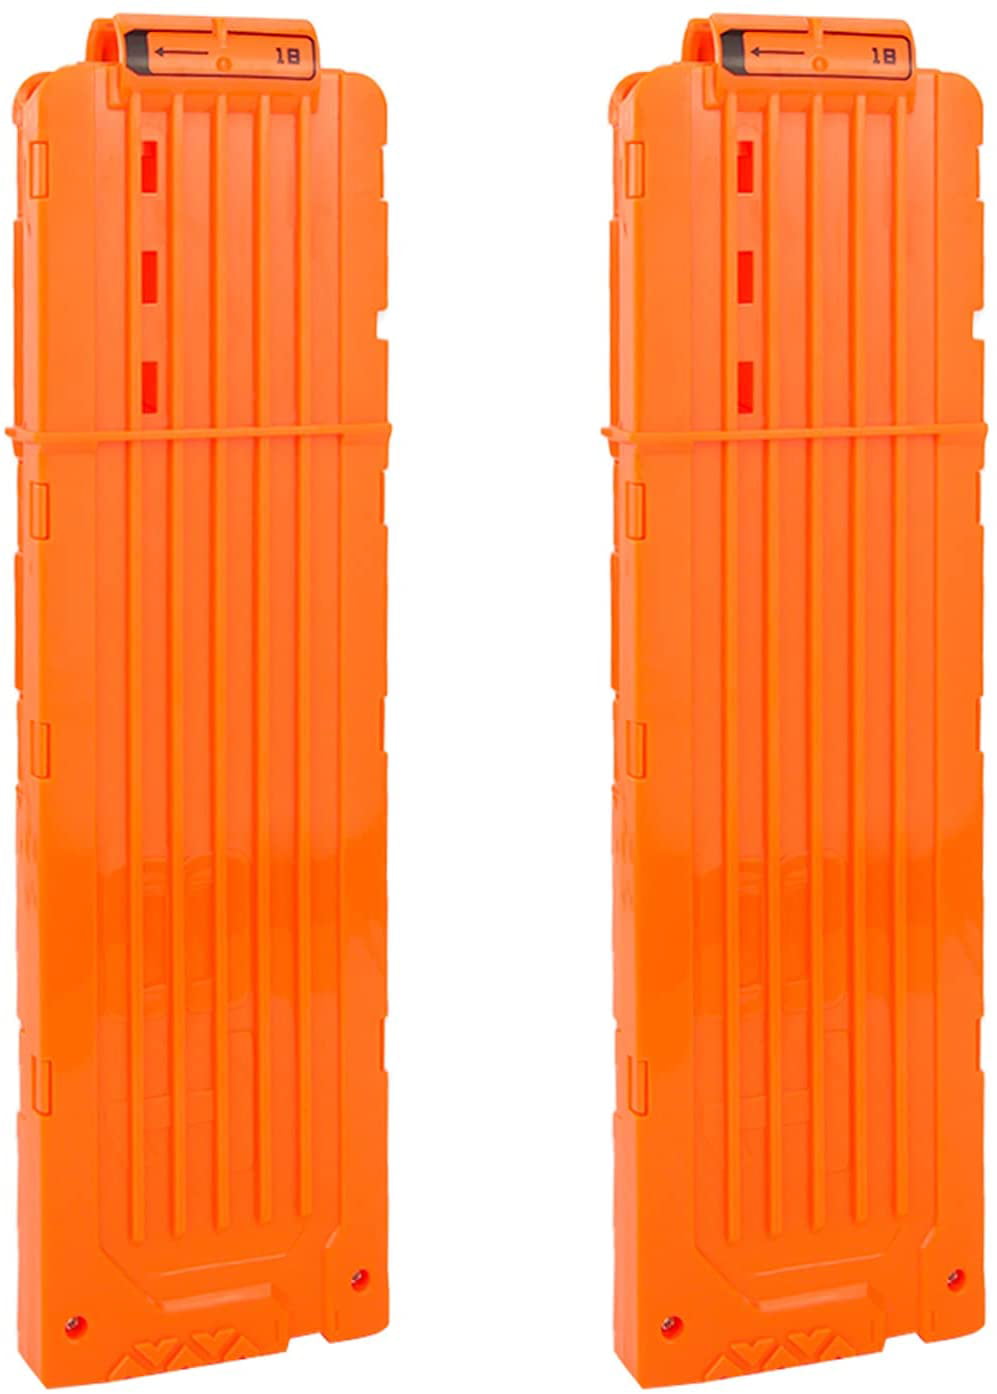 Replacement Reload Clip 12 Darts For Elite Blaster Toy Gun Orange 